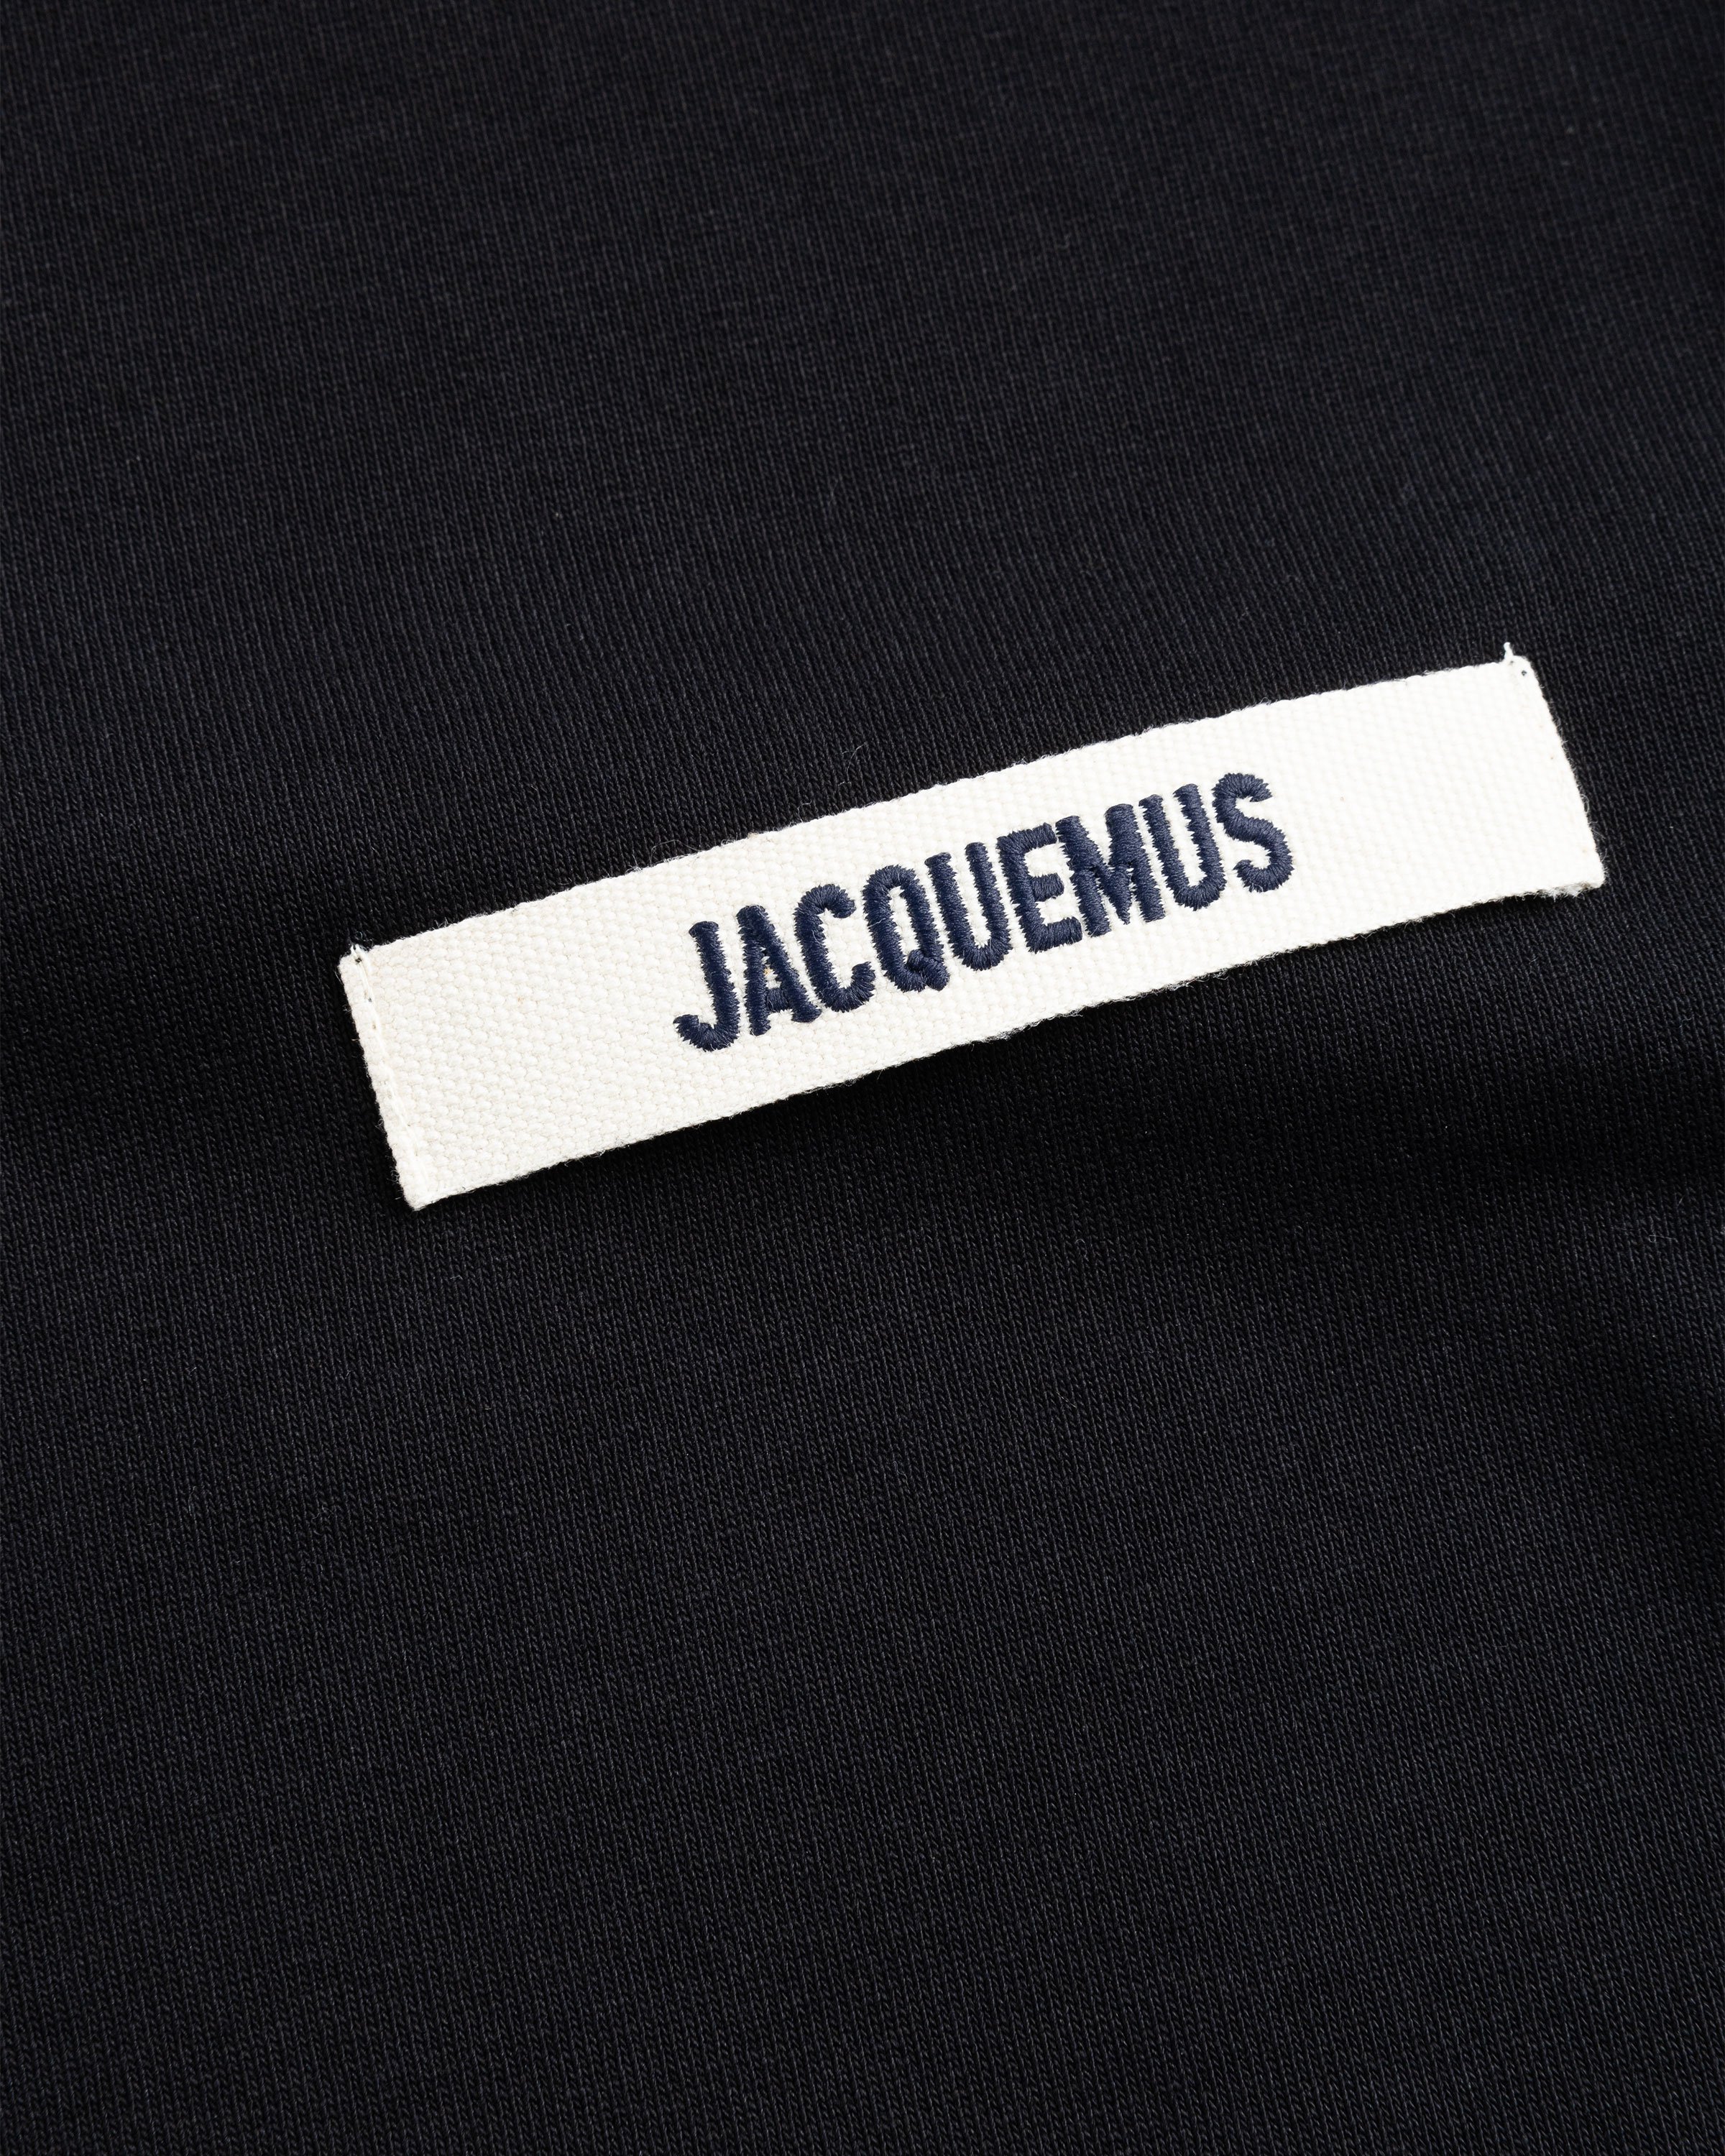 JACQUEMUS - Le T-Shirt Gros Grain Black - Clothing - Black - Image 7